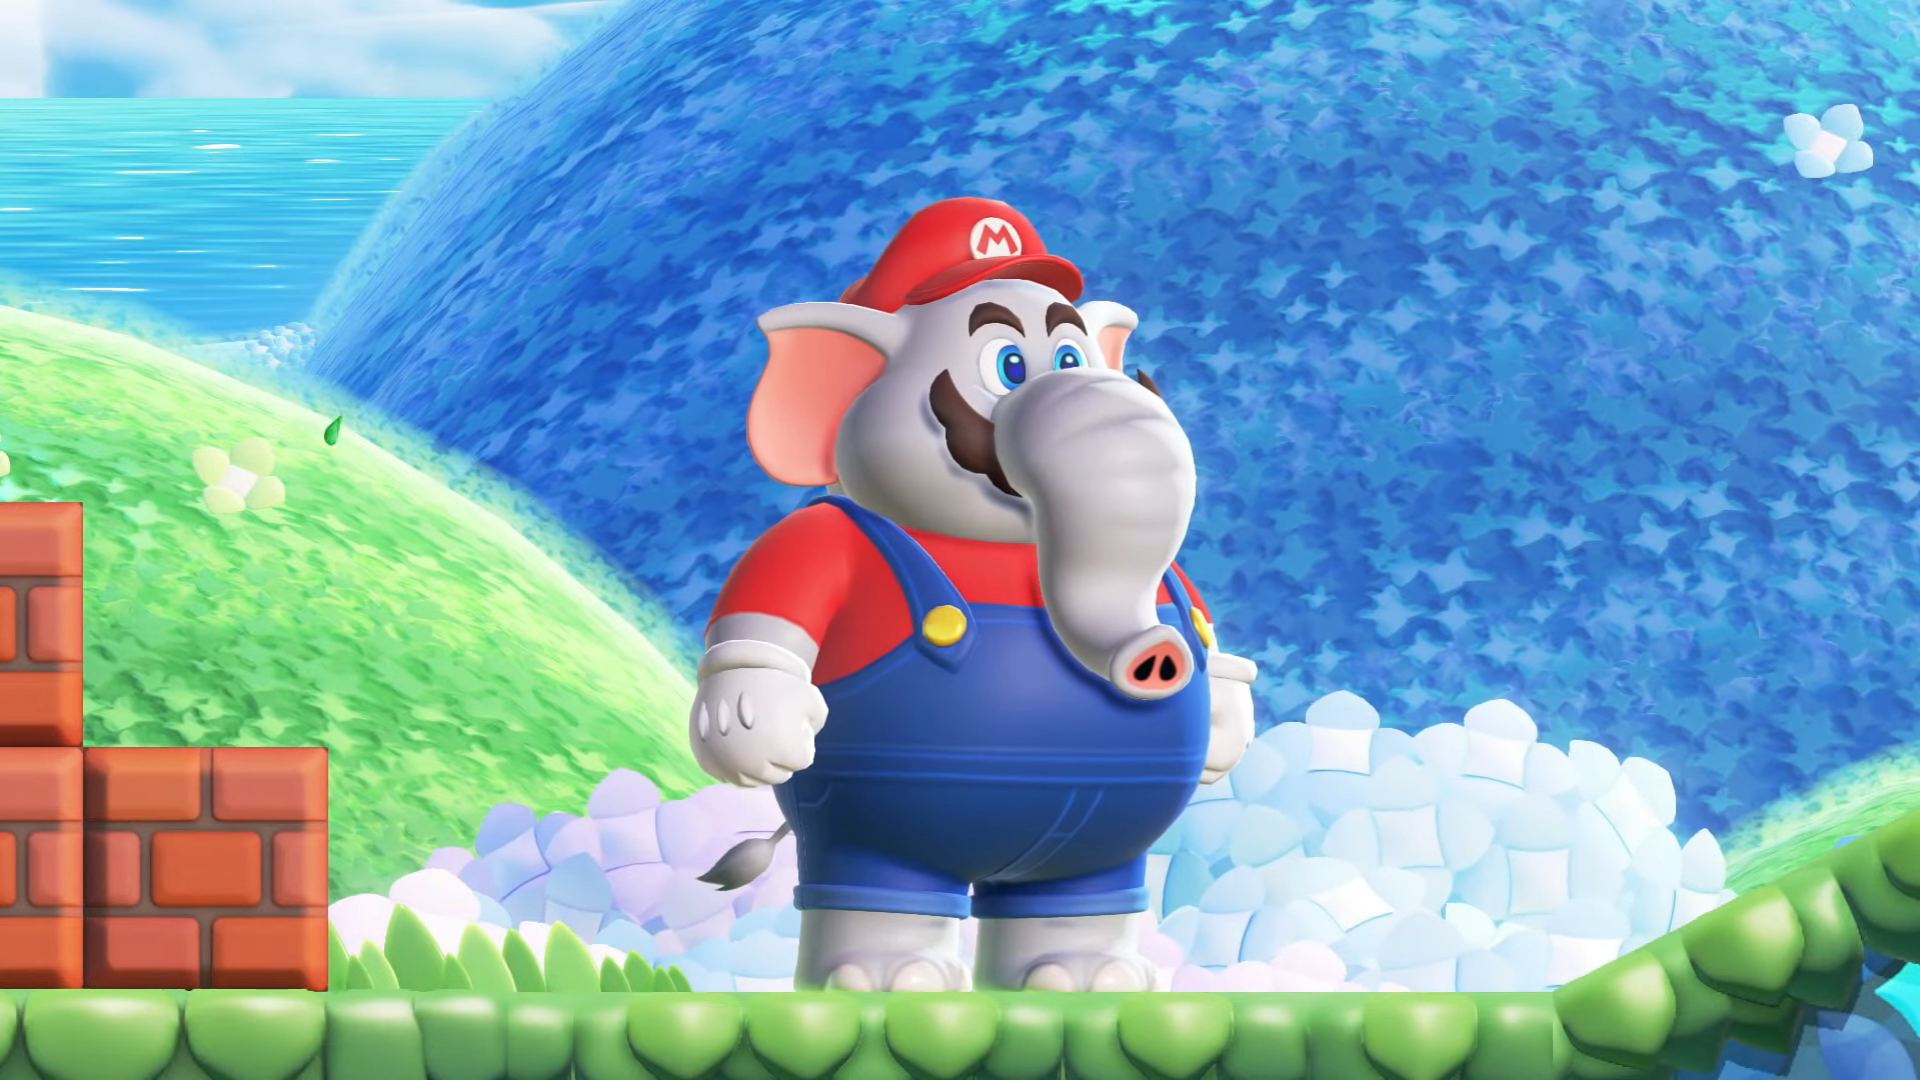 New 2D Mario Adventure ‘Super Mario Bros. Wonder’ Revealed With October Release Date